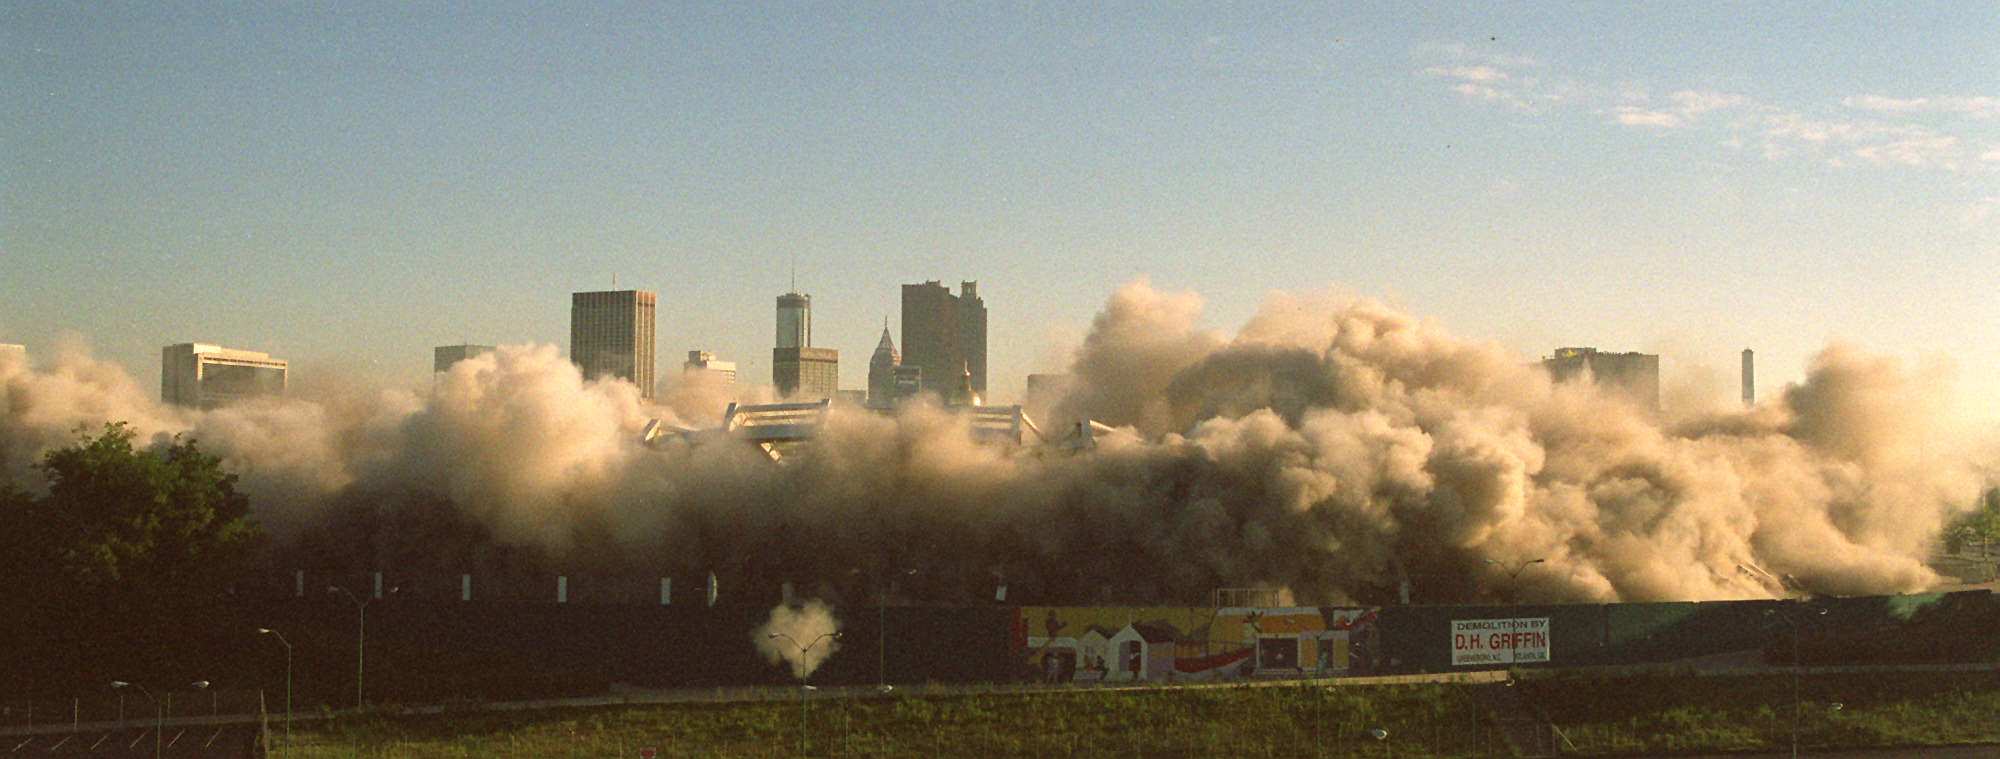 Video: Atlanta-Fulton County Stadium demolition